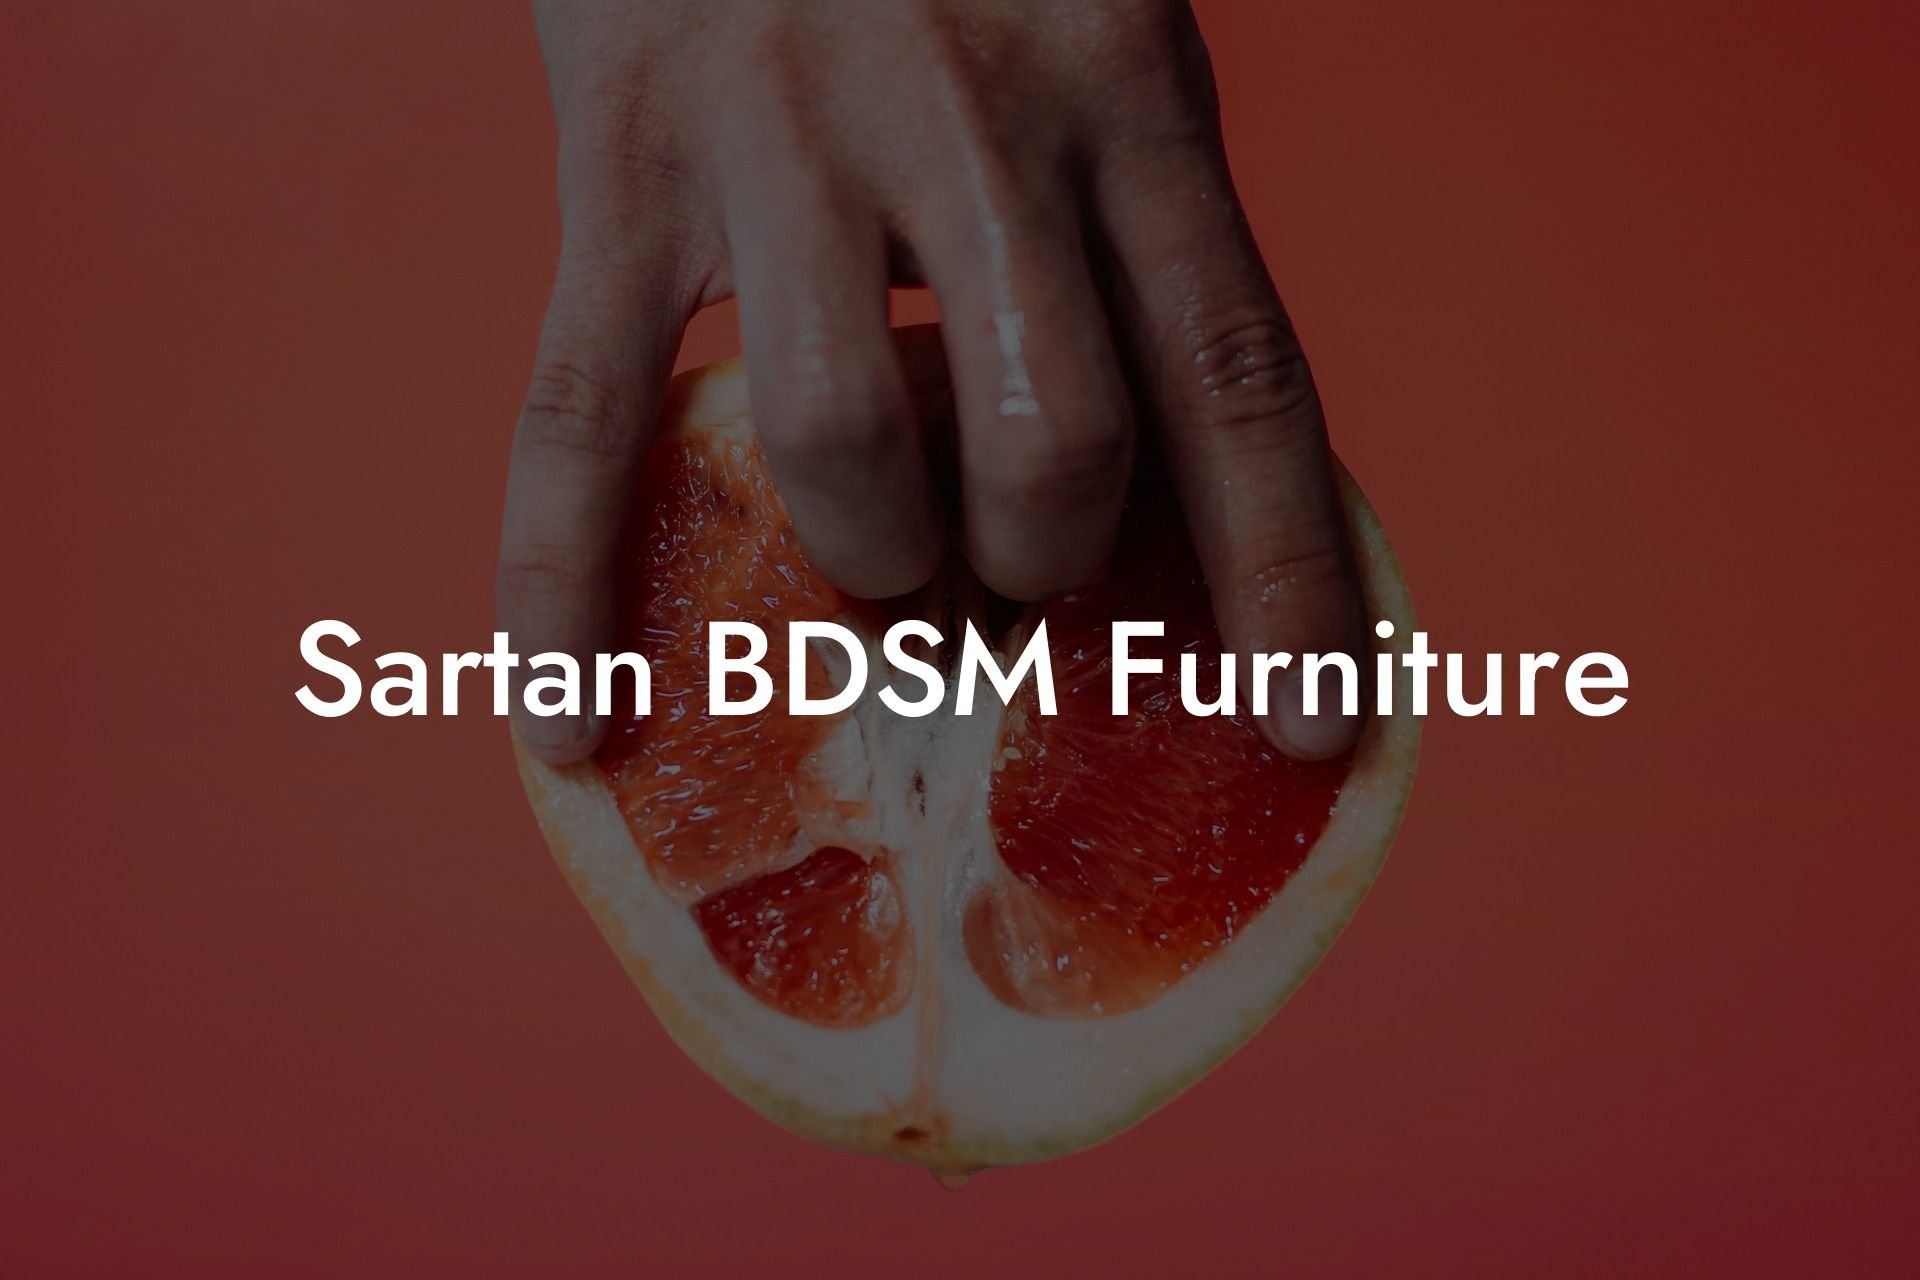 Sartan BDSM Furniture